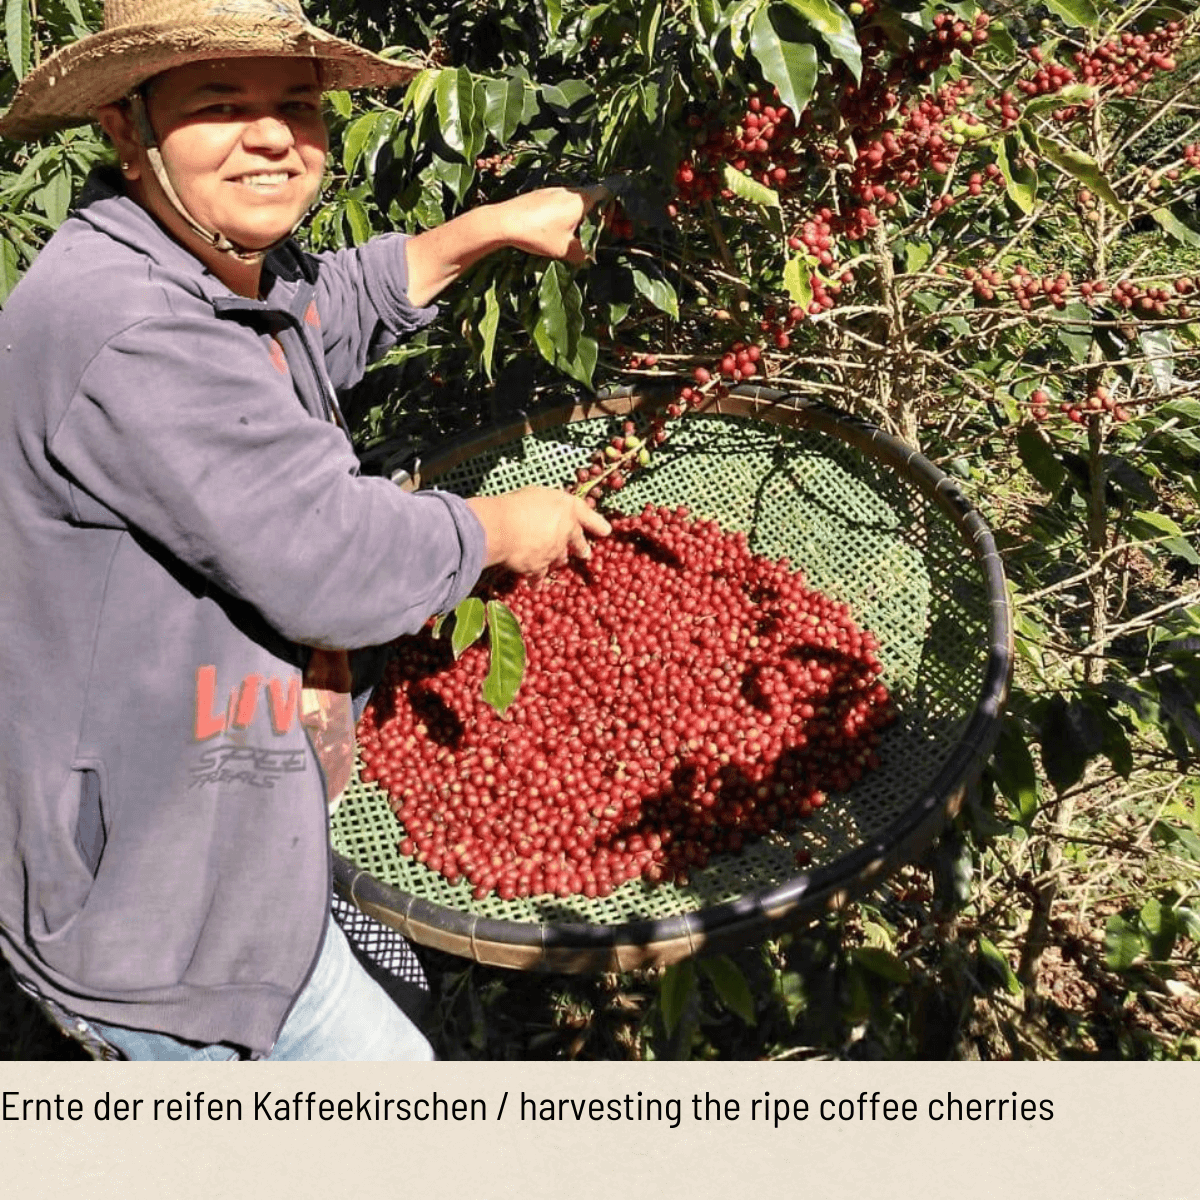 BRASILEÑA Bio Fair Trade Kaffeebohnen